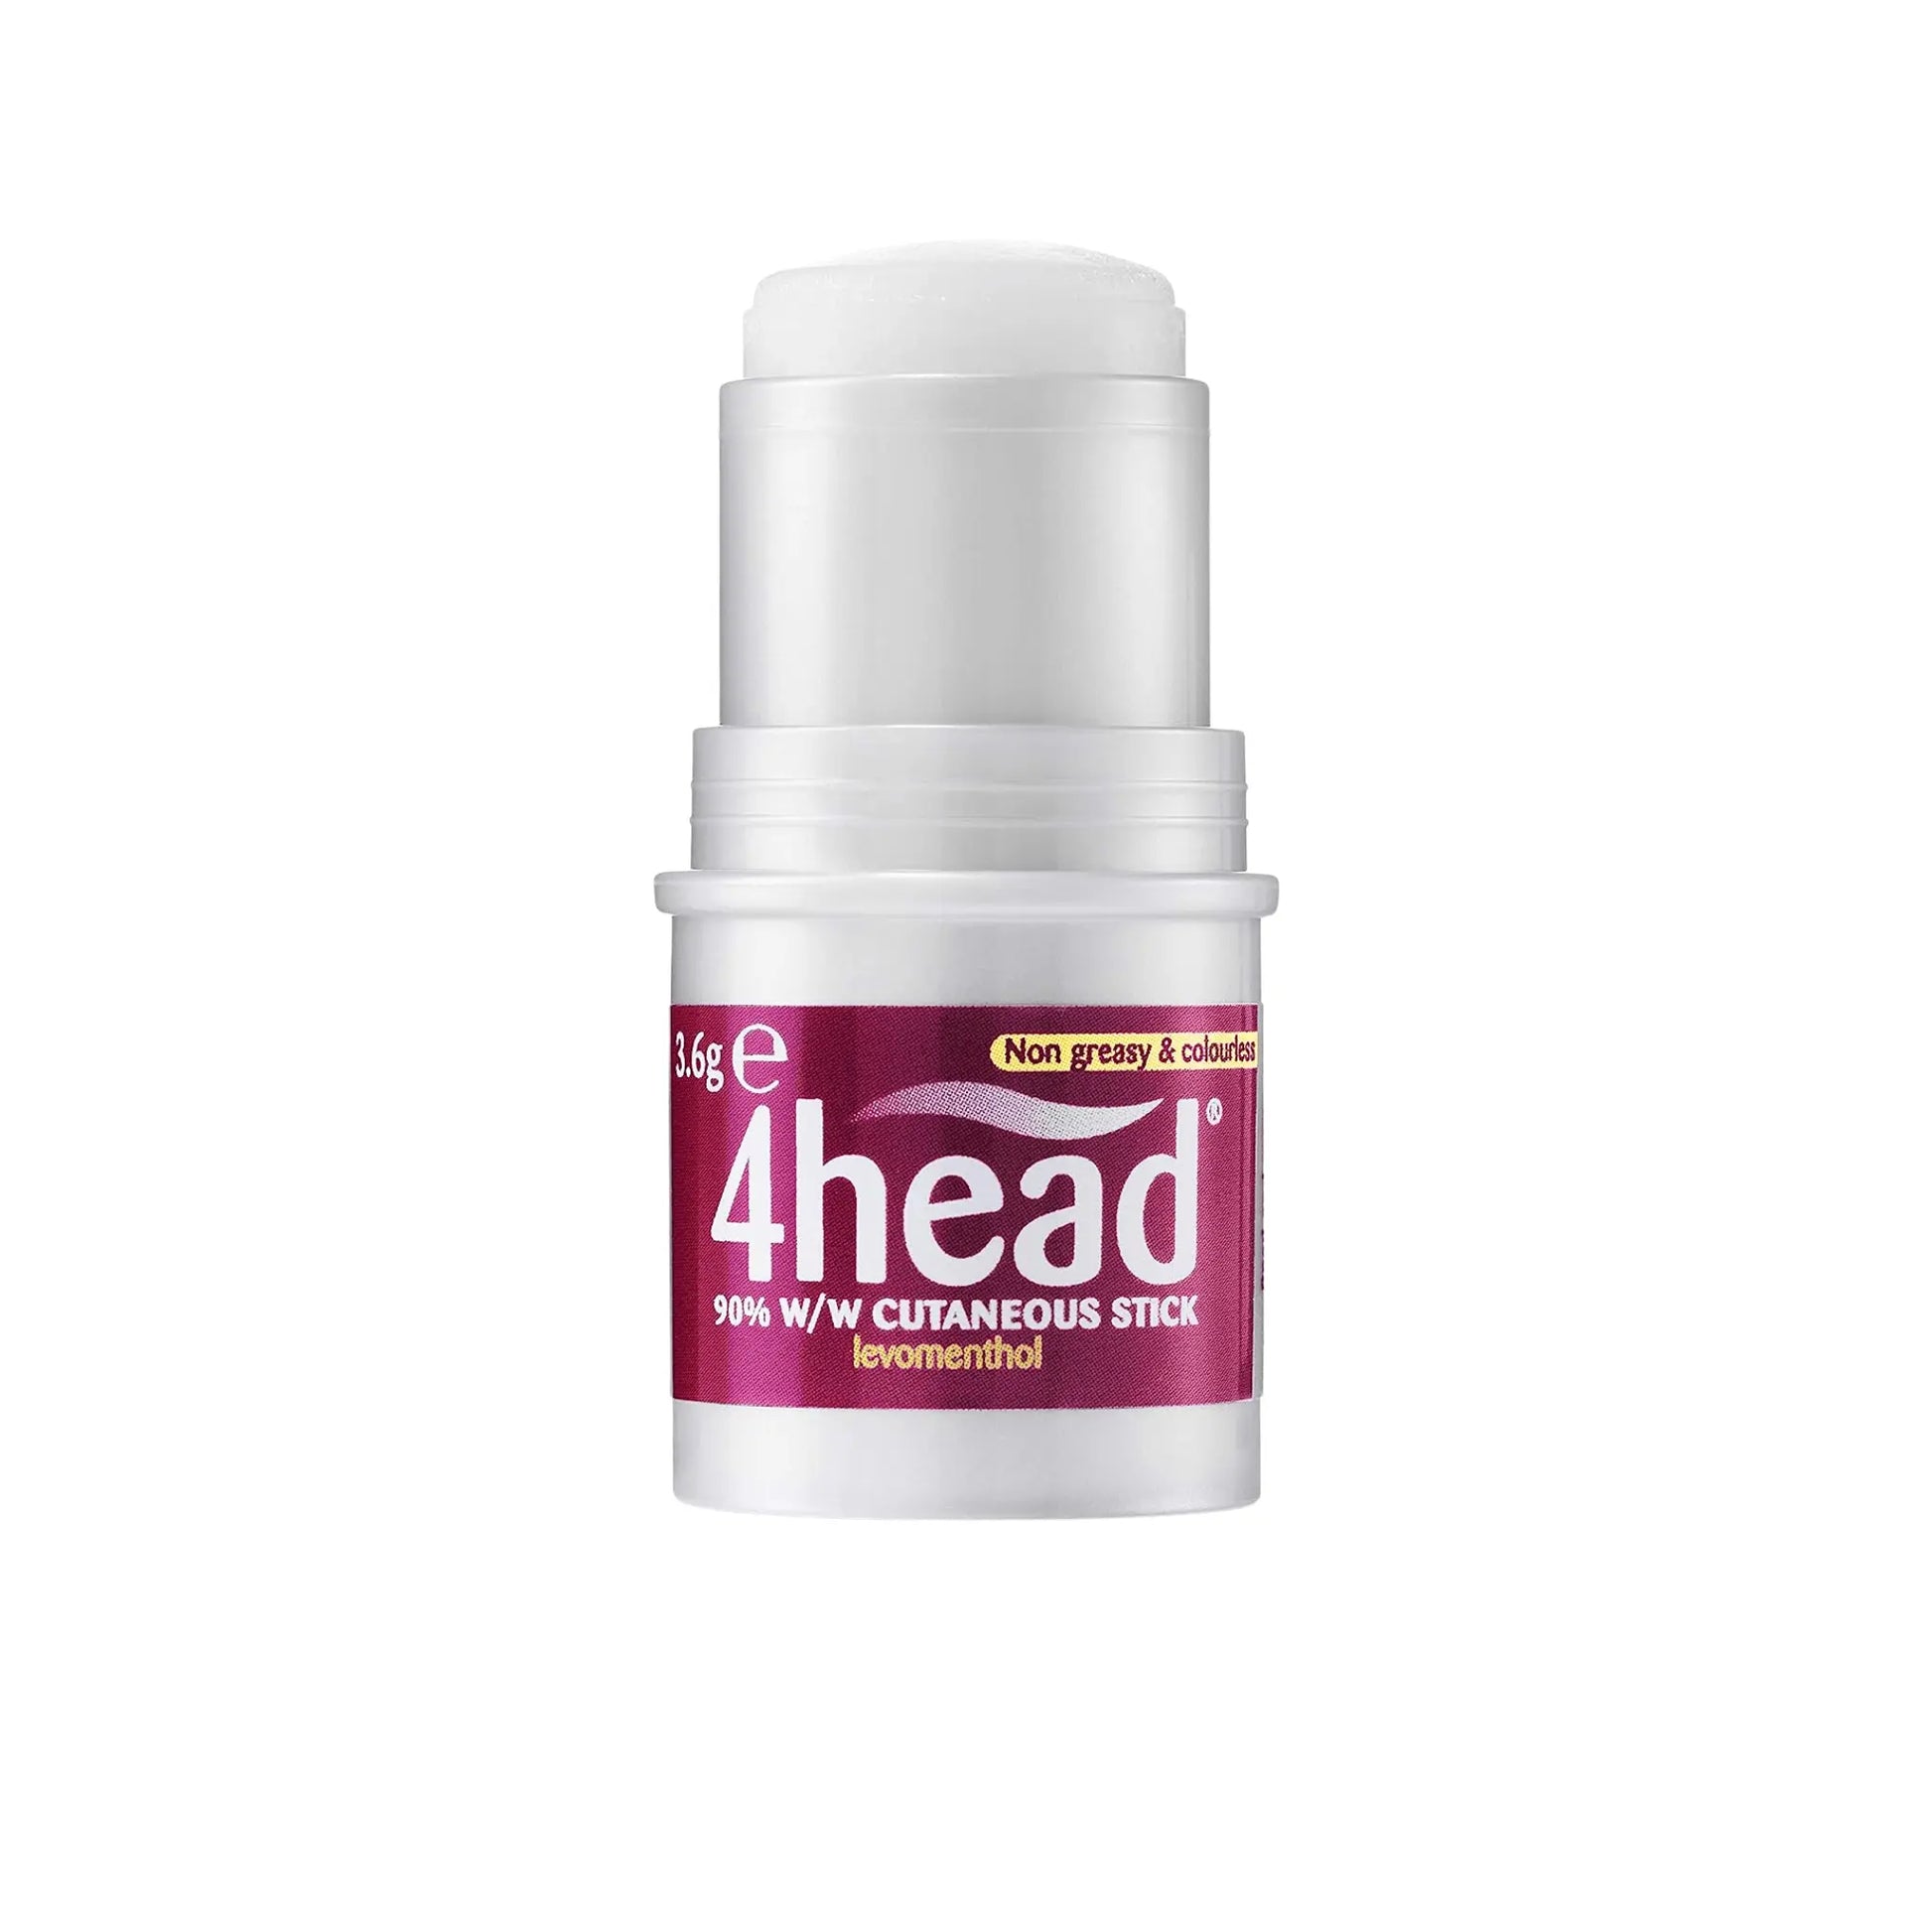 4 Head Effective Headache Relief - Arc Health Nutrition UK Ltd 